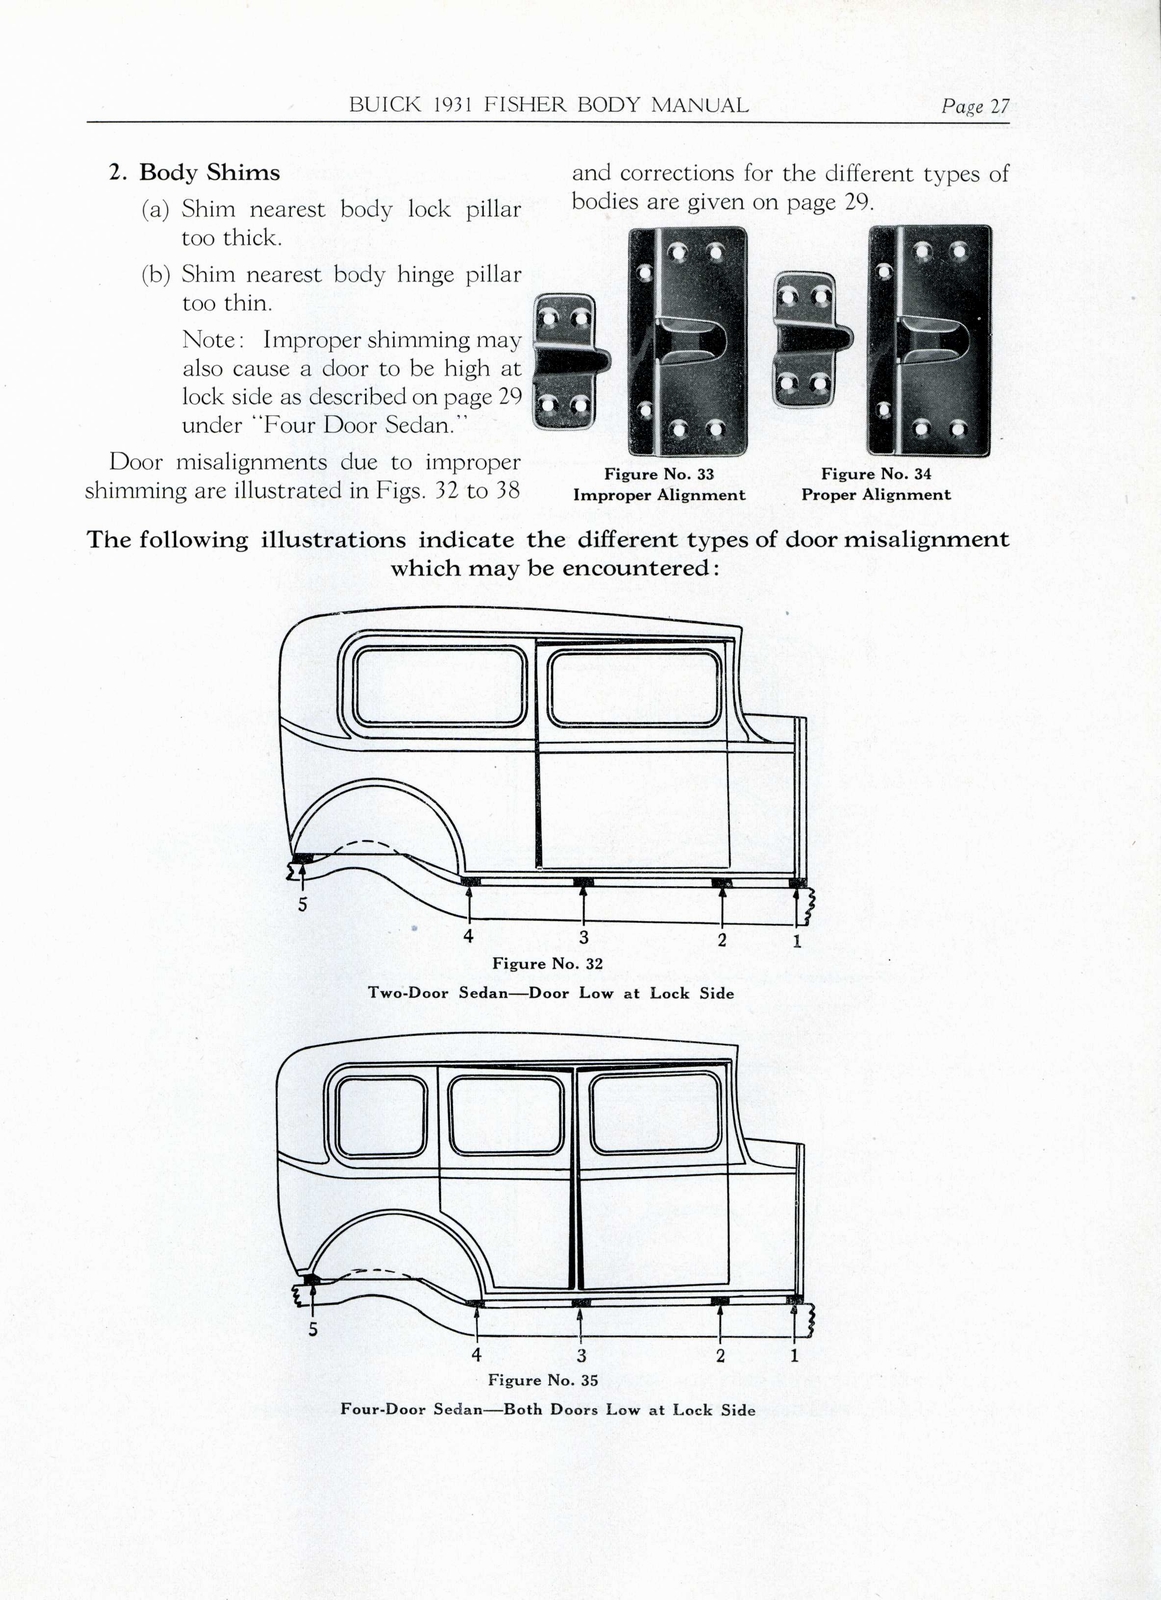 n_1931 Buick Fisher Body Manual-27.jpg